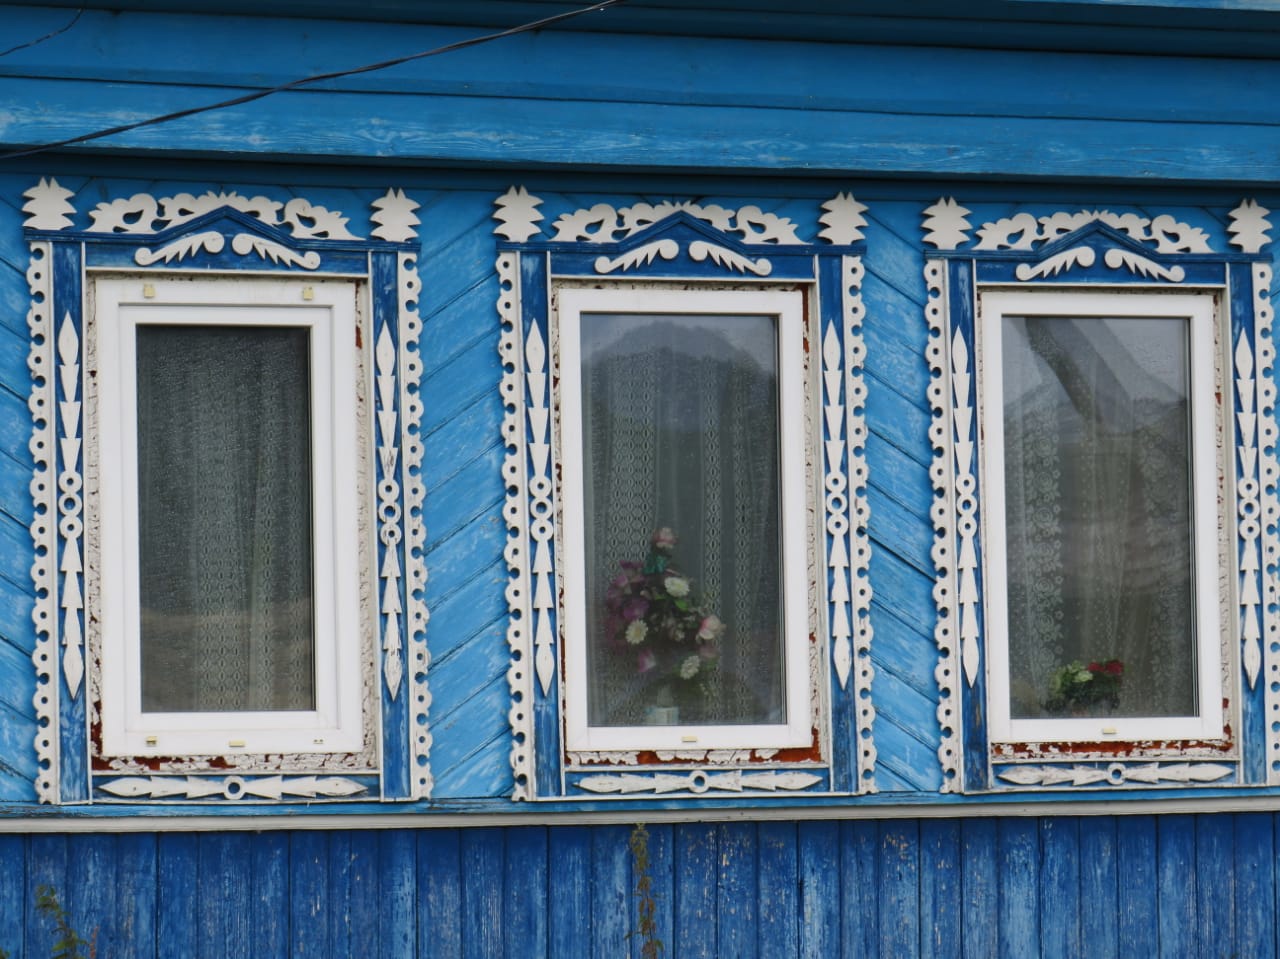 Төбәкне өйрәнүчеләр форумында катнашучылар Свердловск өлкәсенең Әрәкәй авылында (фоторепортаж)